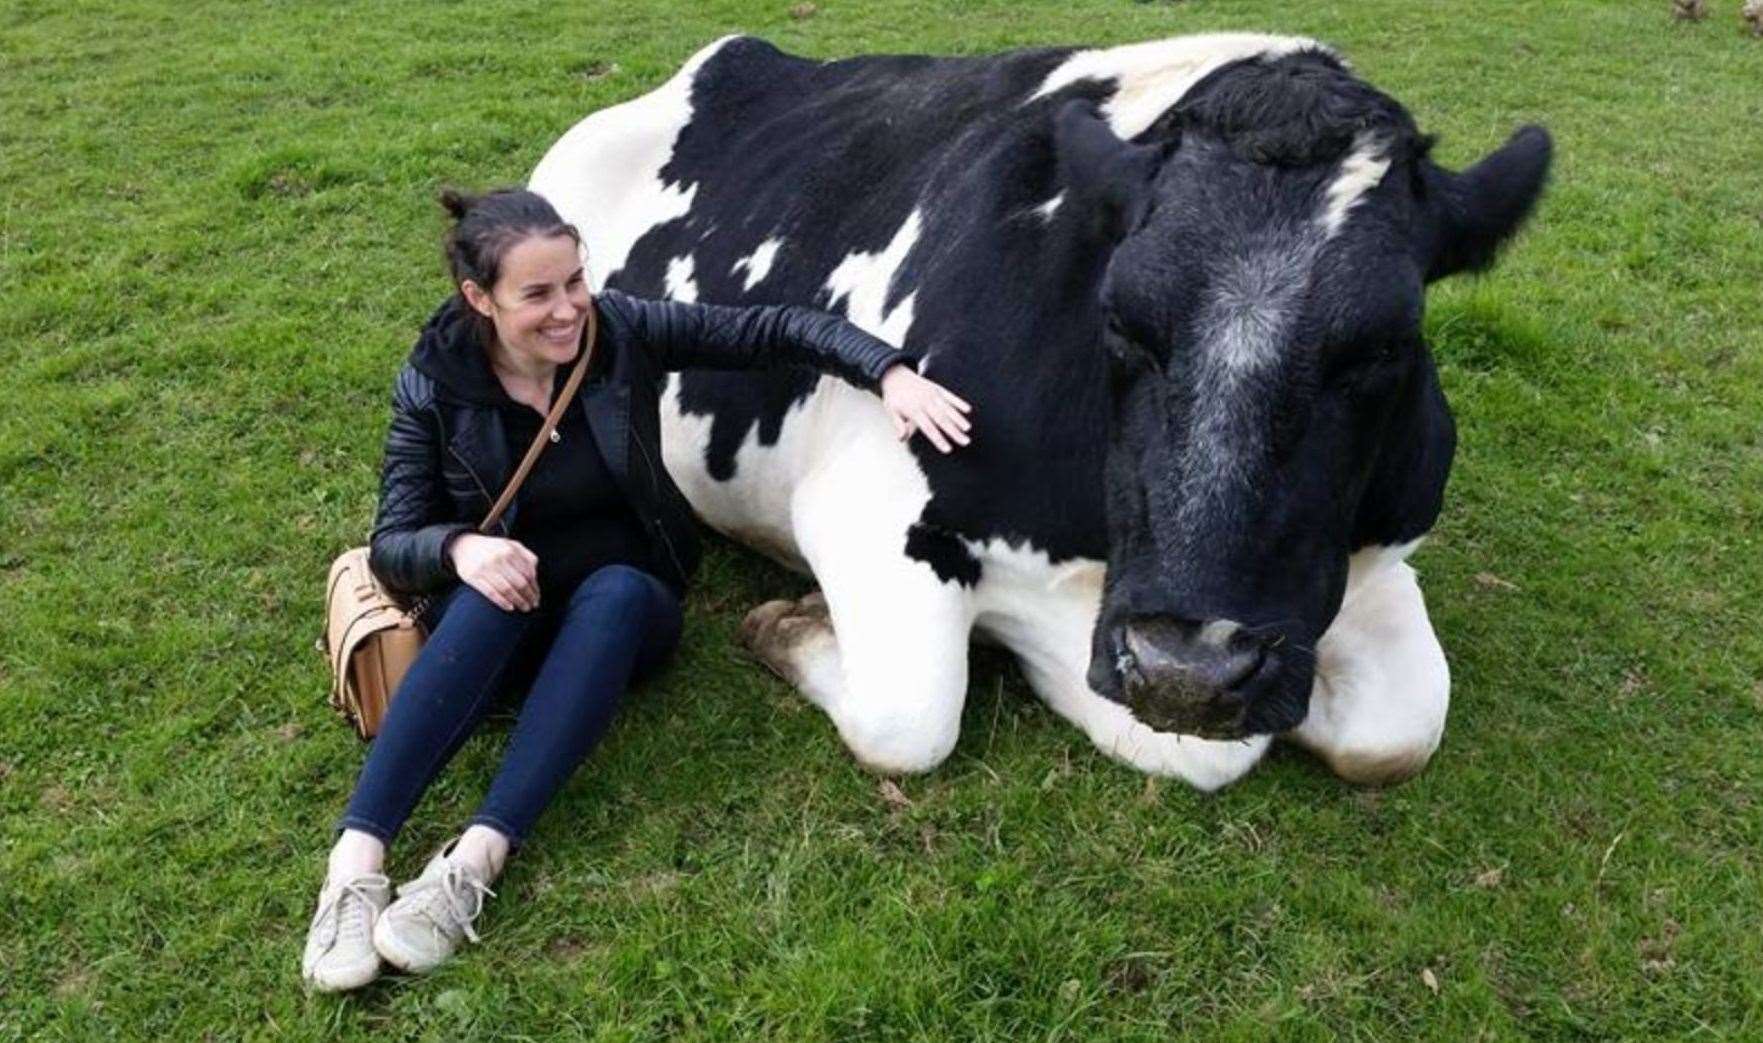 Maria Chiorando, editor of Plant Based News, meets a cow